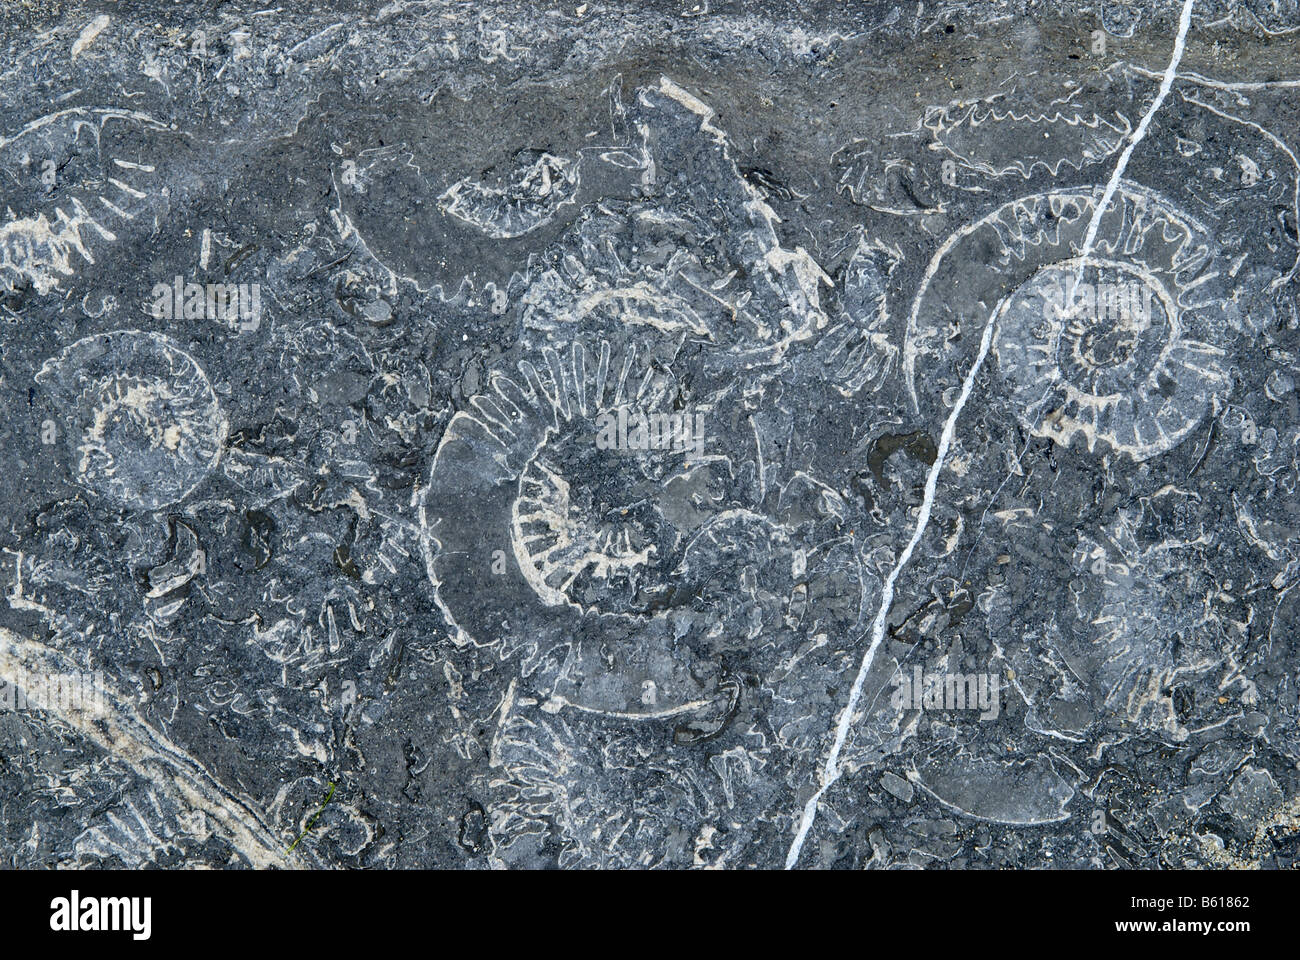 ammonites in rock face lyme regis dorset Stock Photo